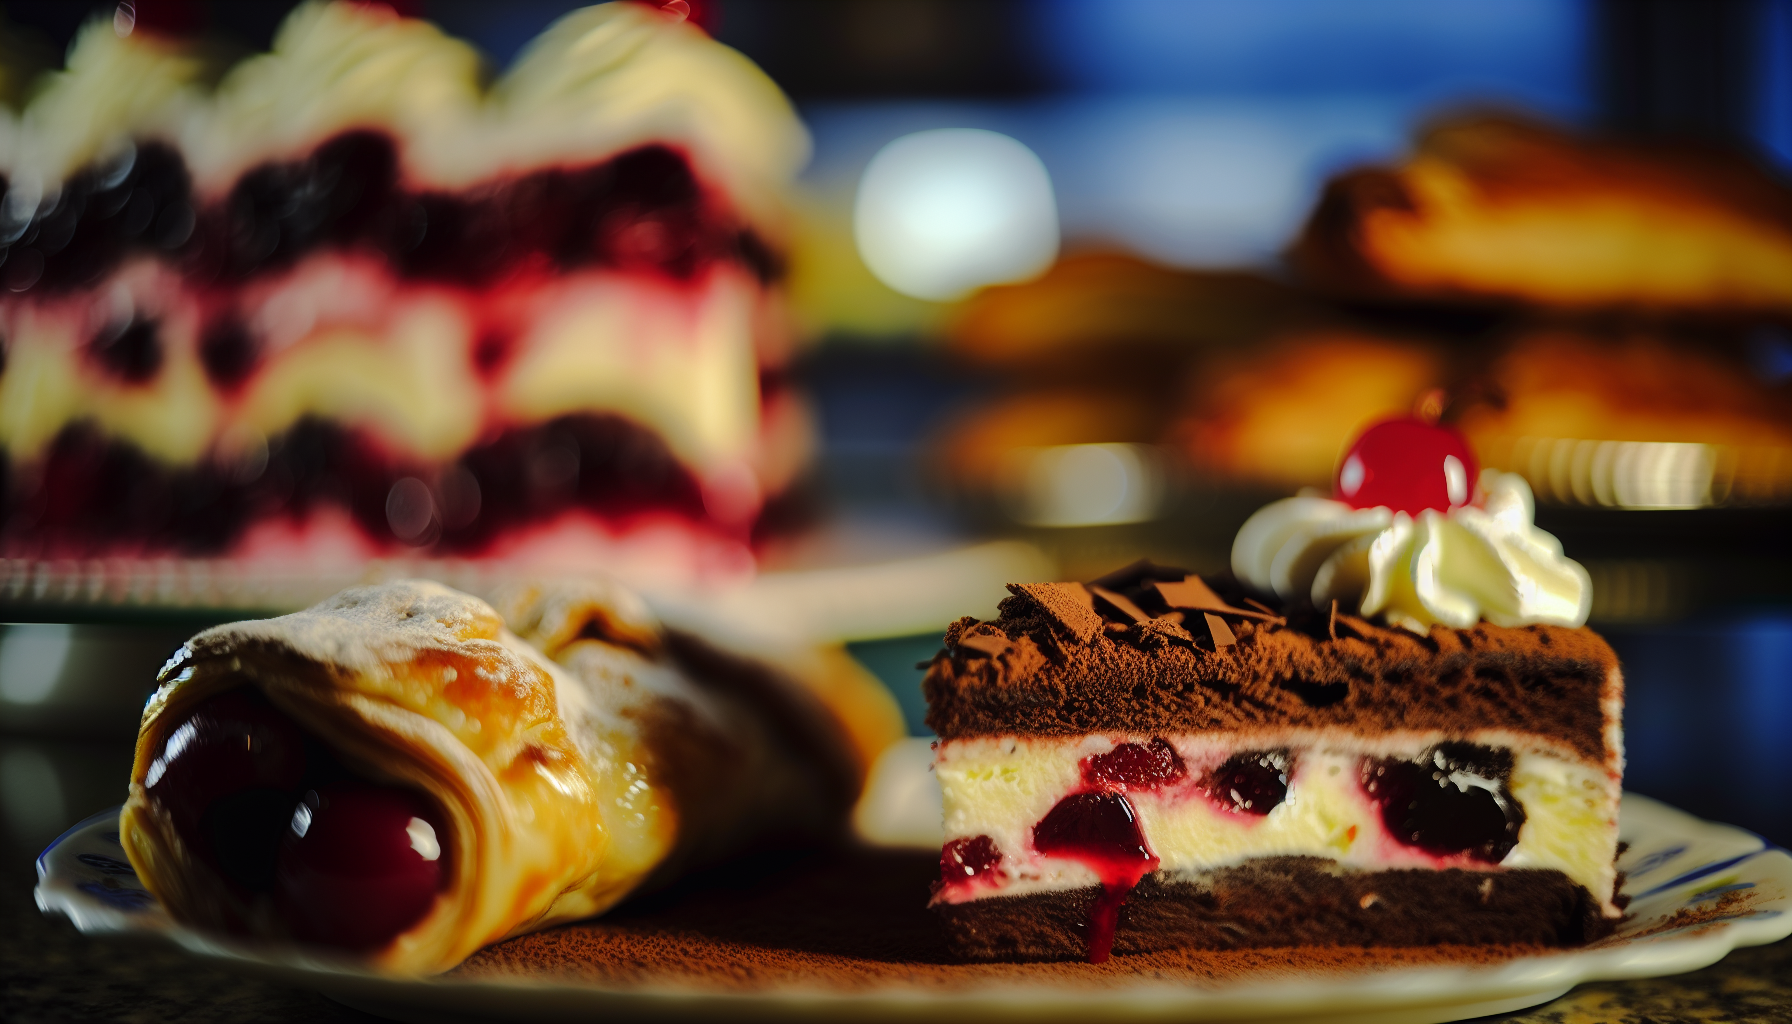 Indulgent desserts: Black Forest cake and apple strudel